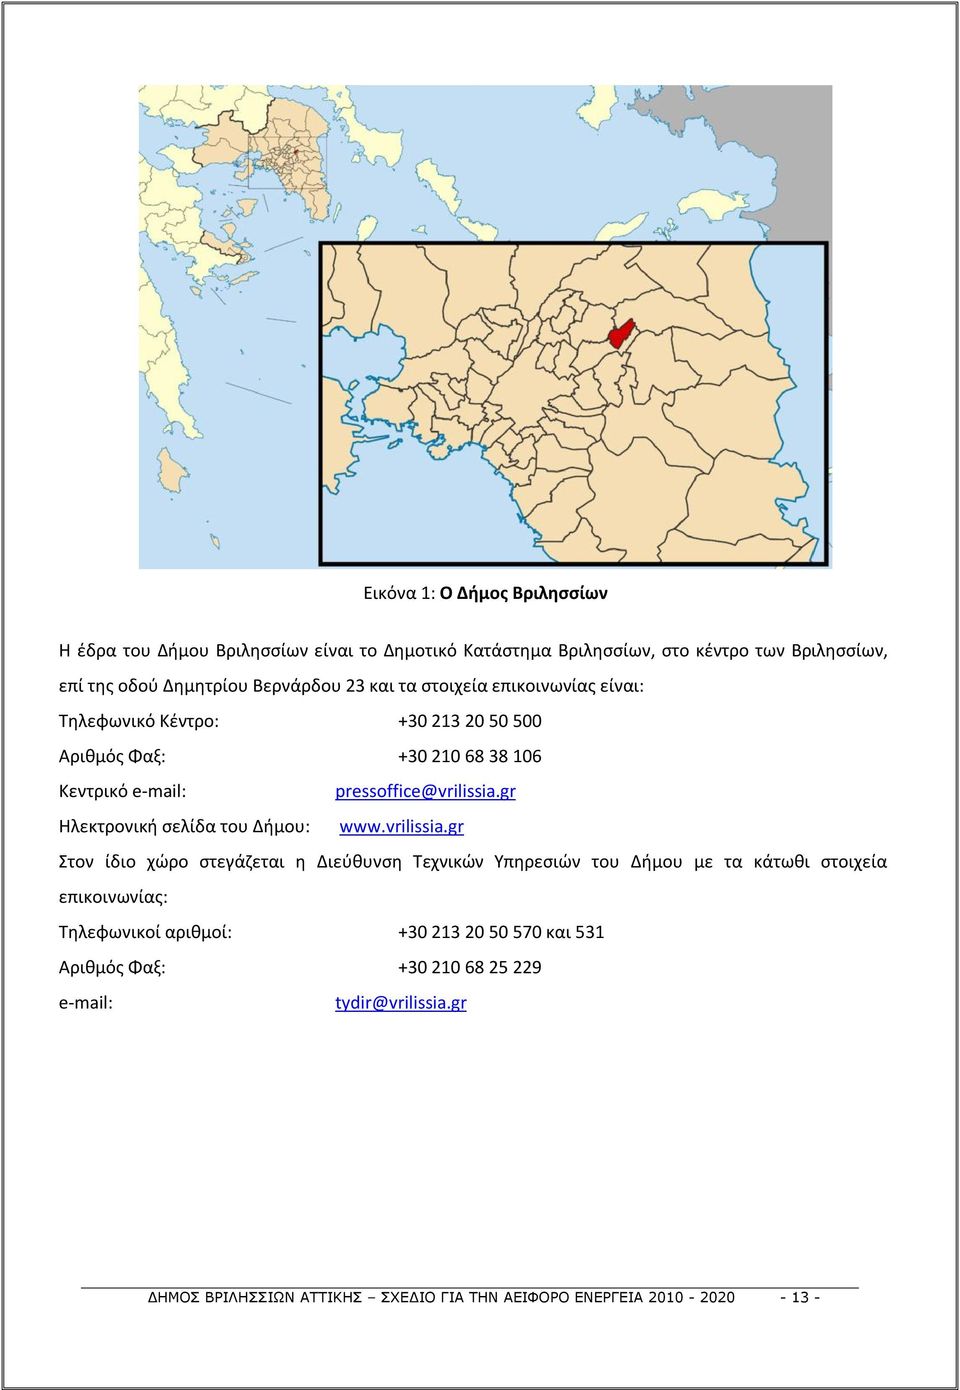 gr Ηλεκτρονική σελίδα του Δήμου: www.vrilissia.